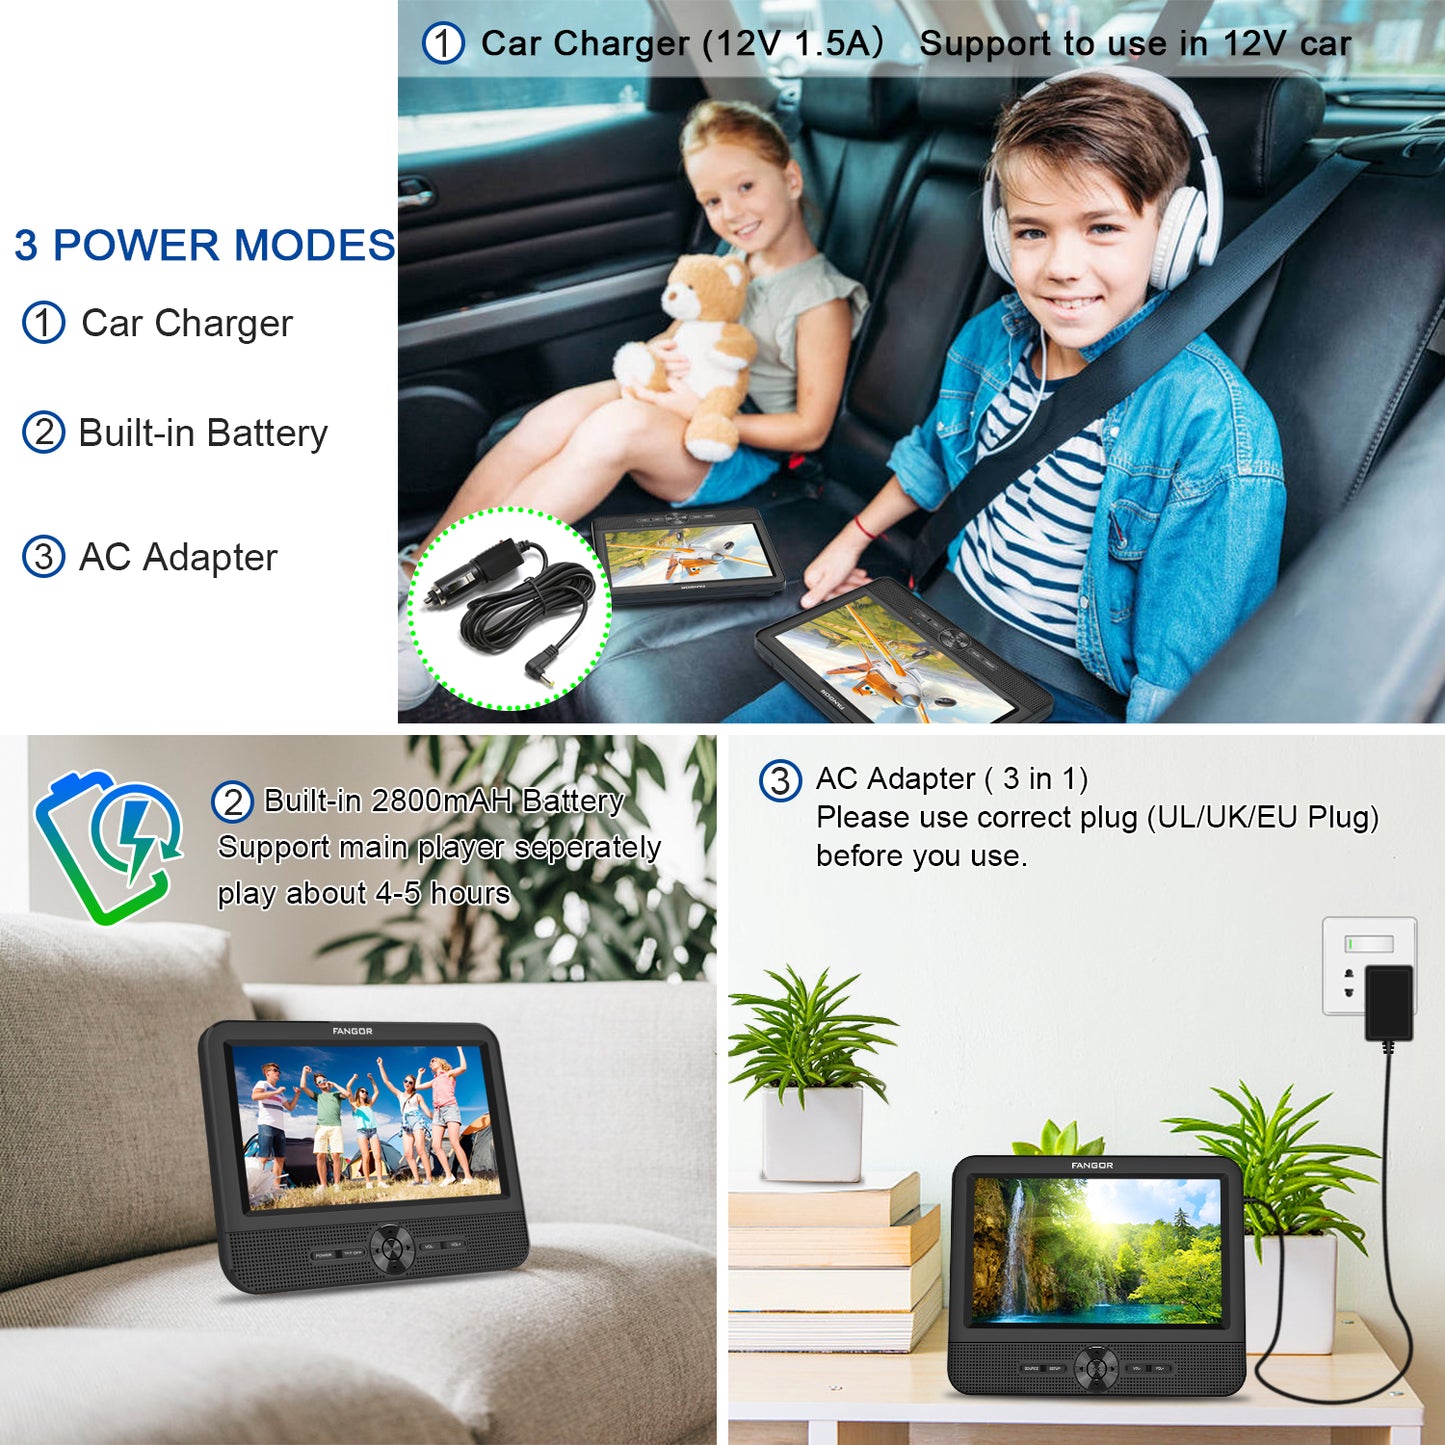 FANGOR 611  7.5’’ Dual Car DVD Player, Two Screens, USB/SD/MMC